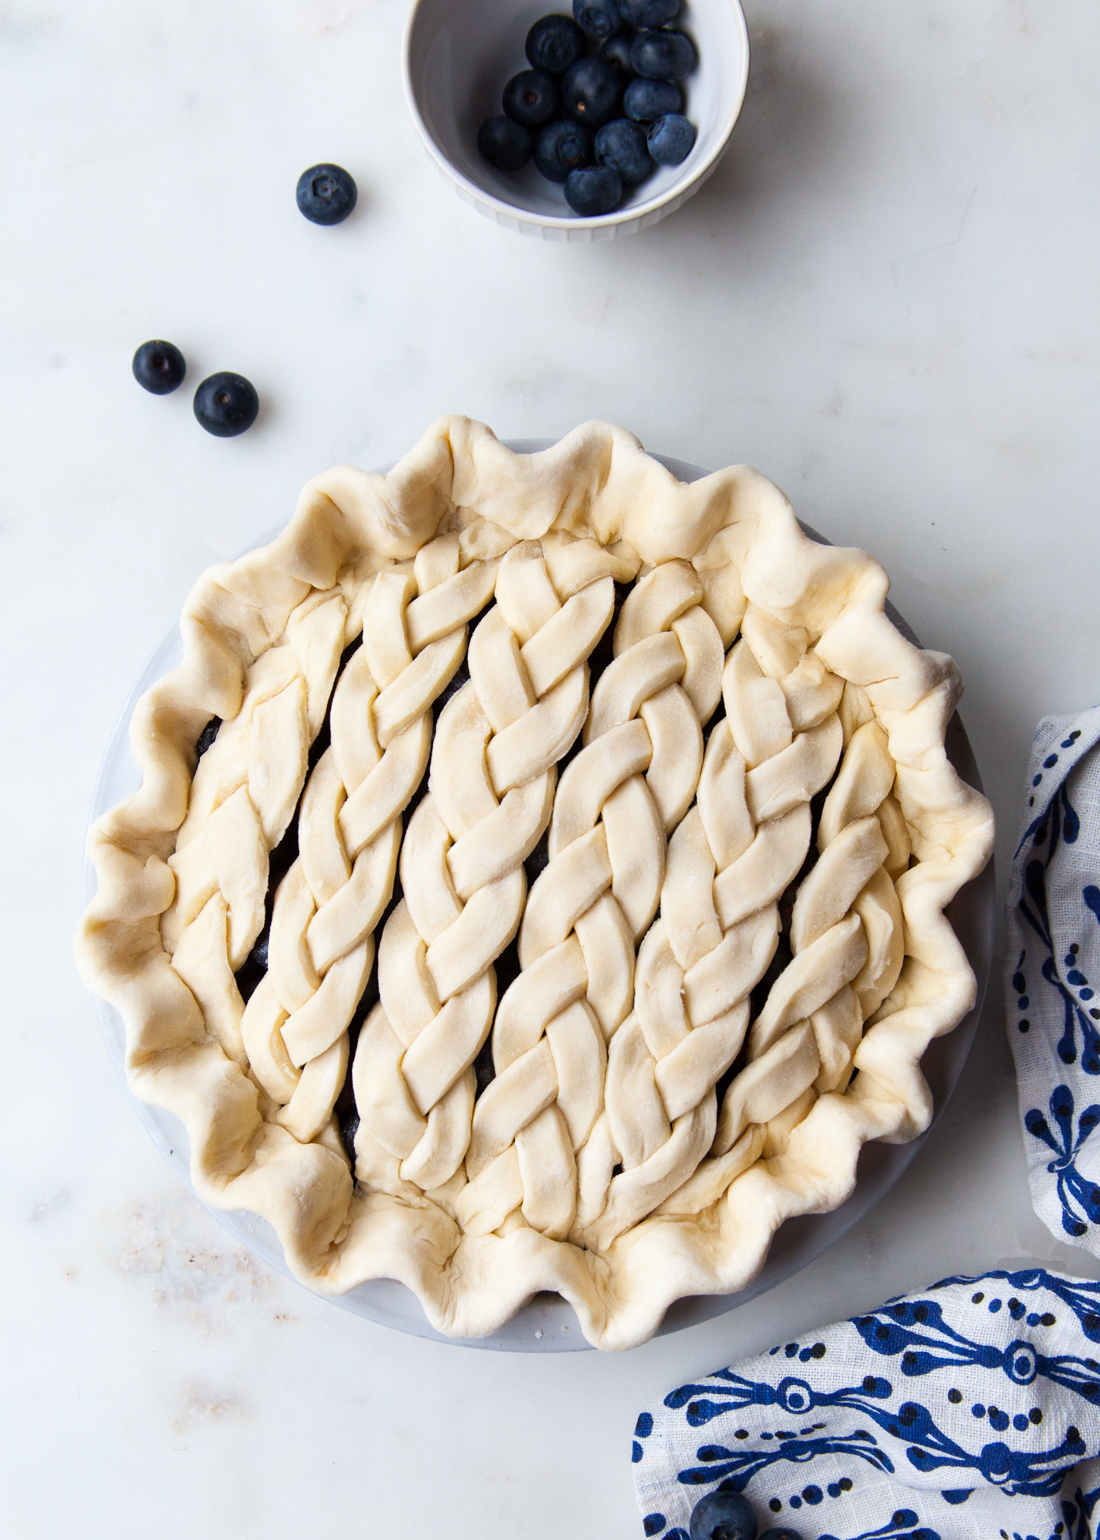 Blackberry and Blueberry Pie Recipe